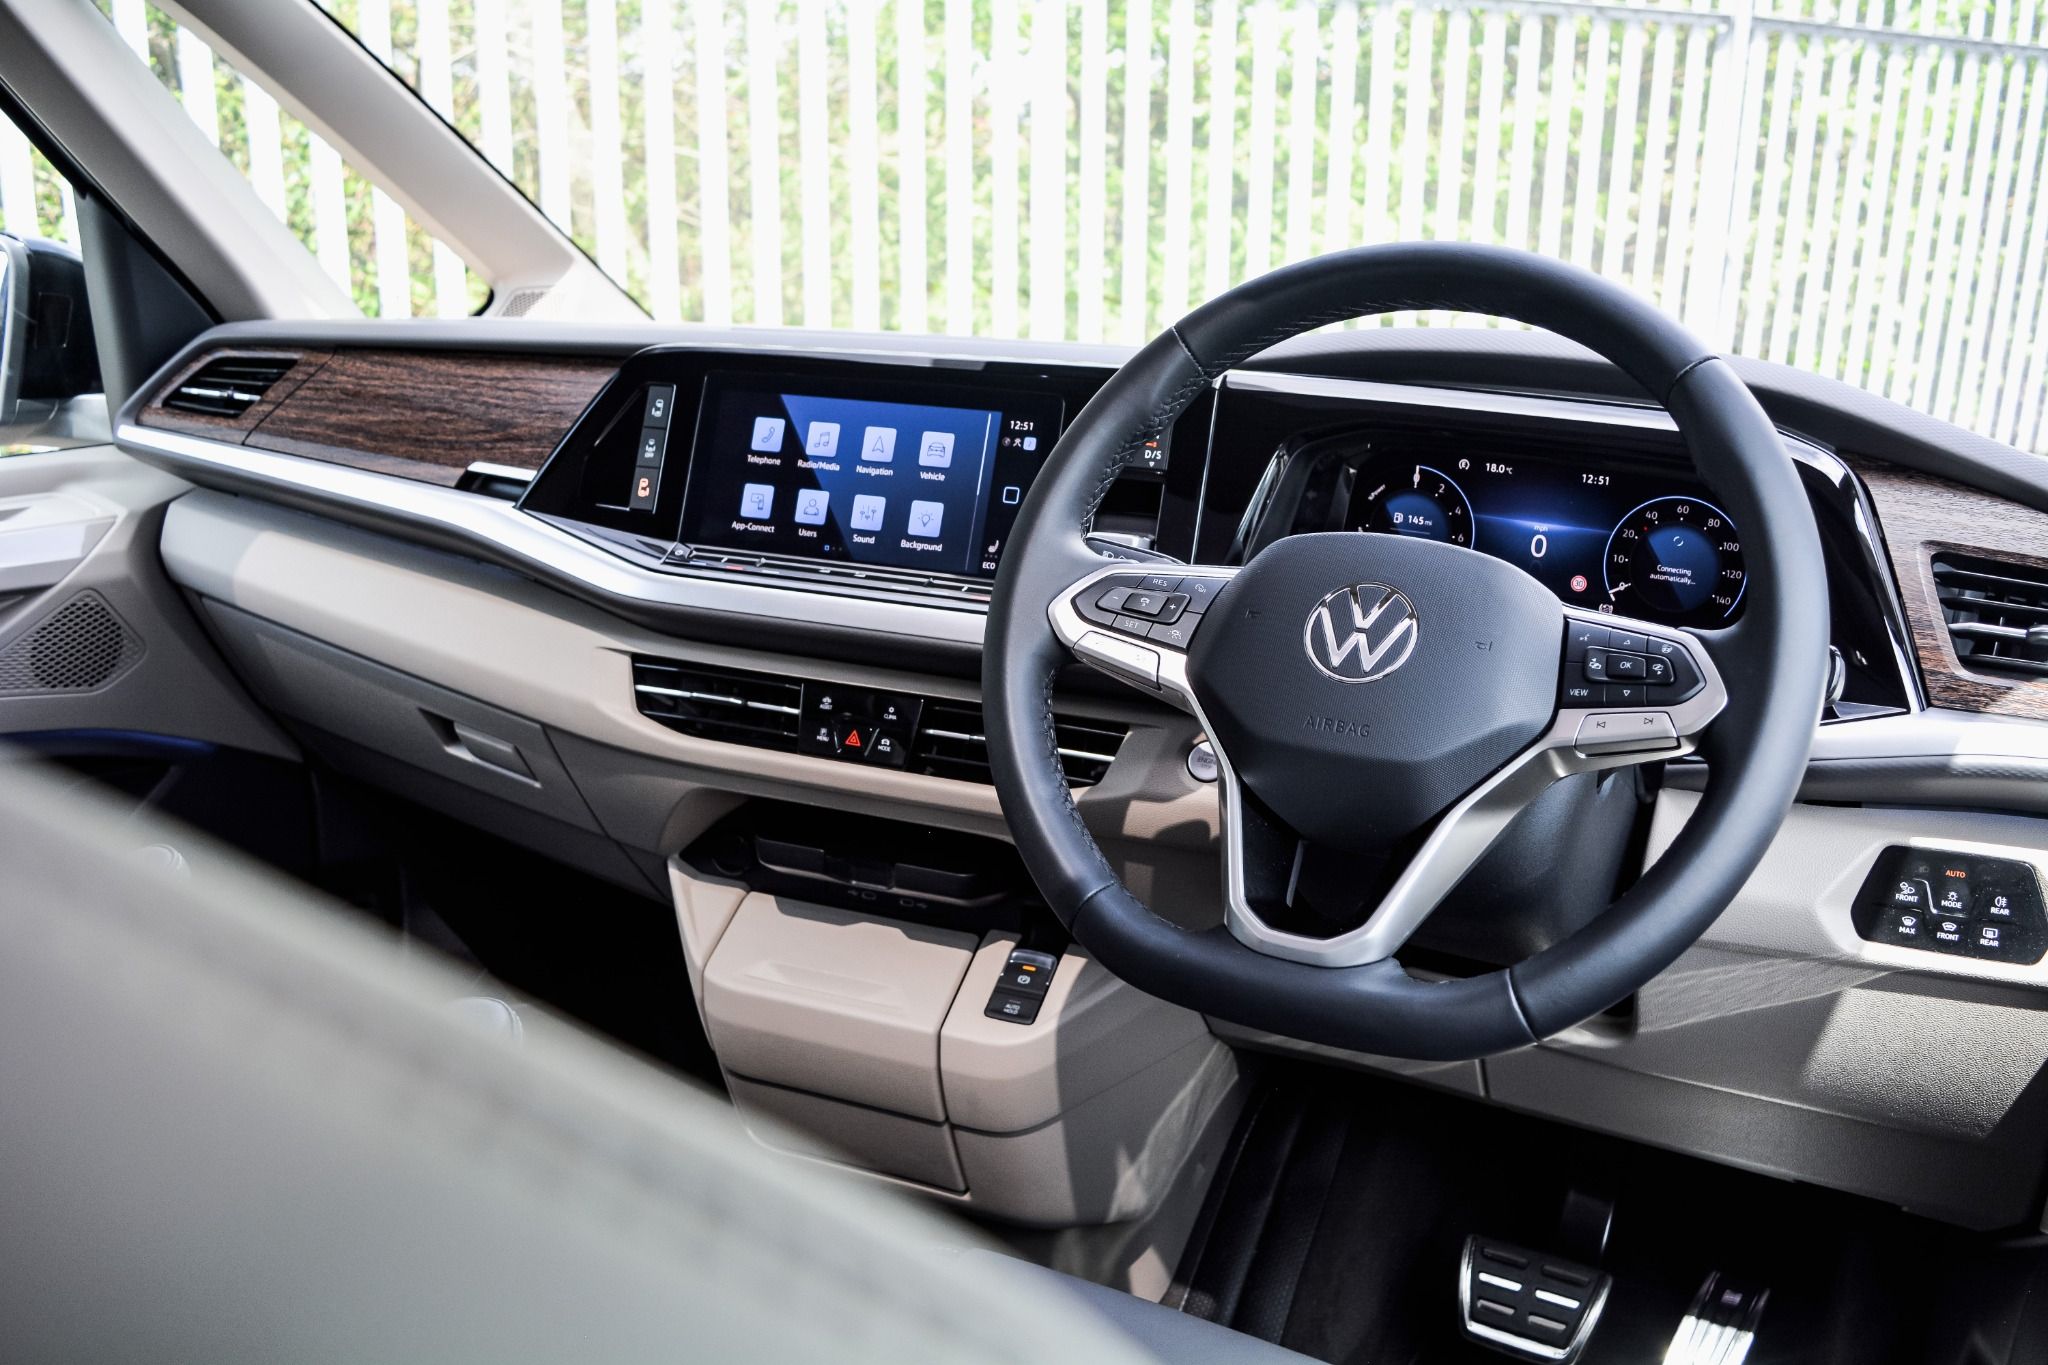 Volkswagen Multivan interior from driver position